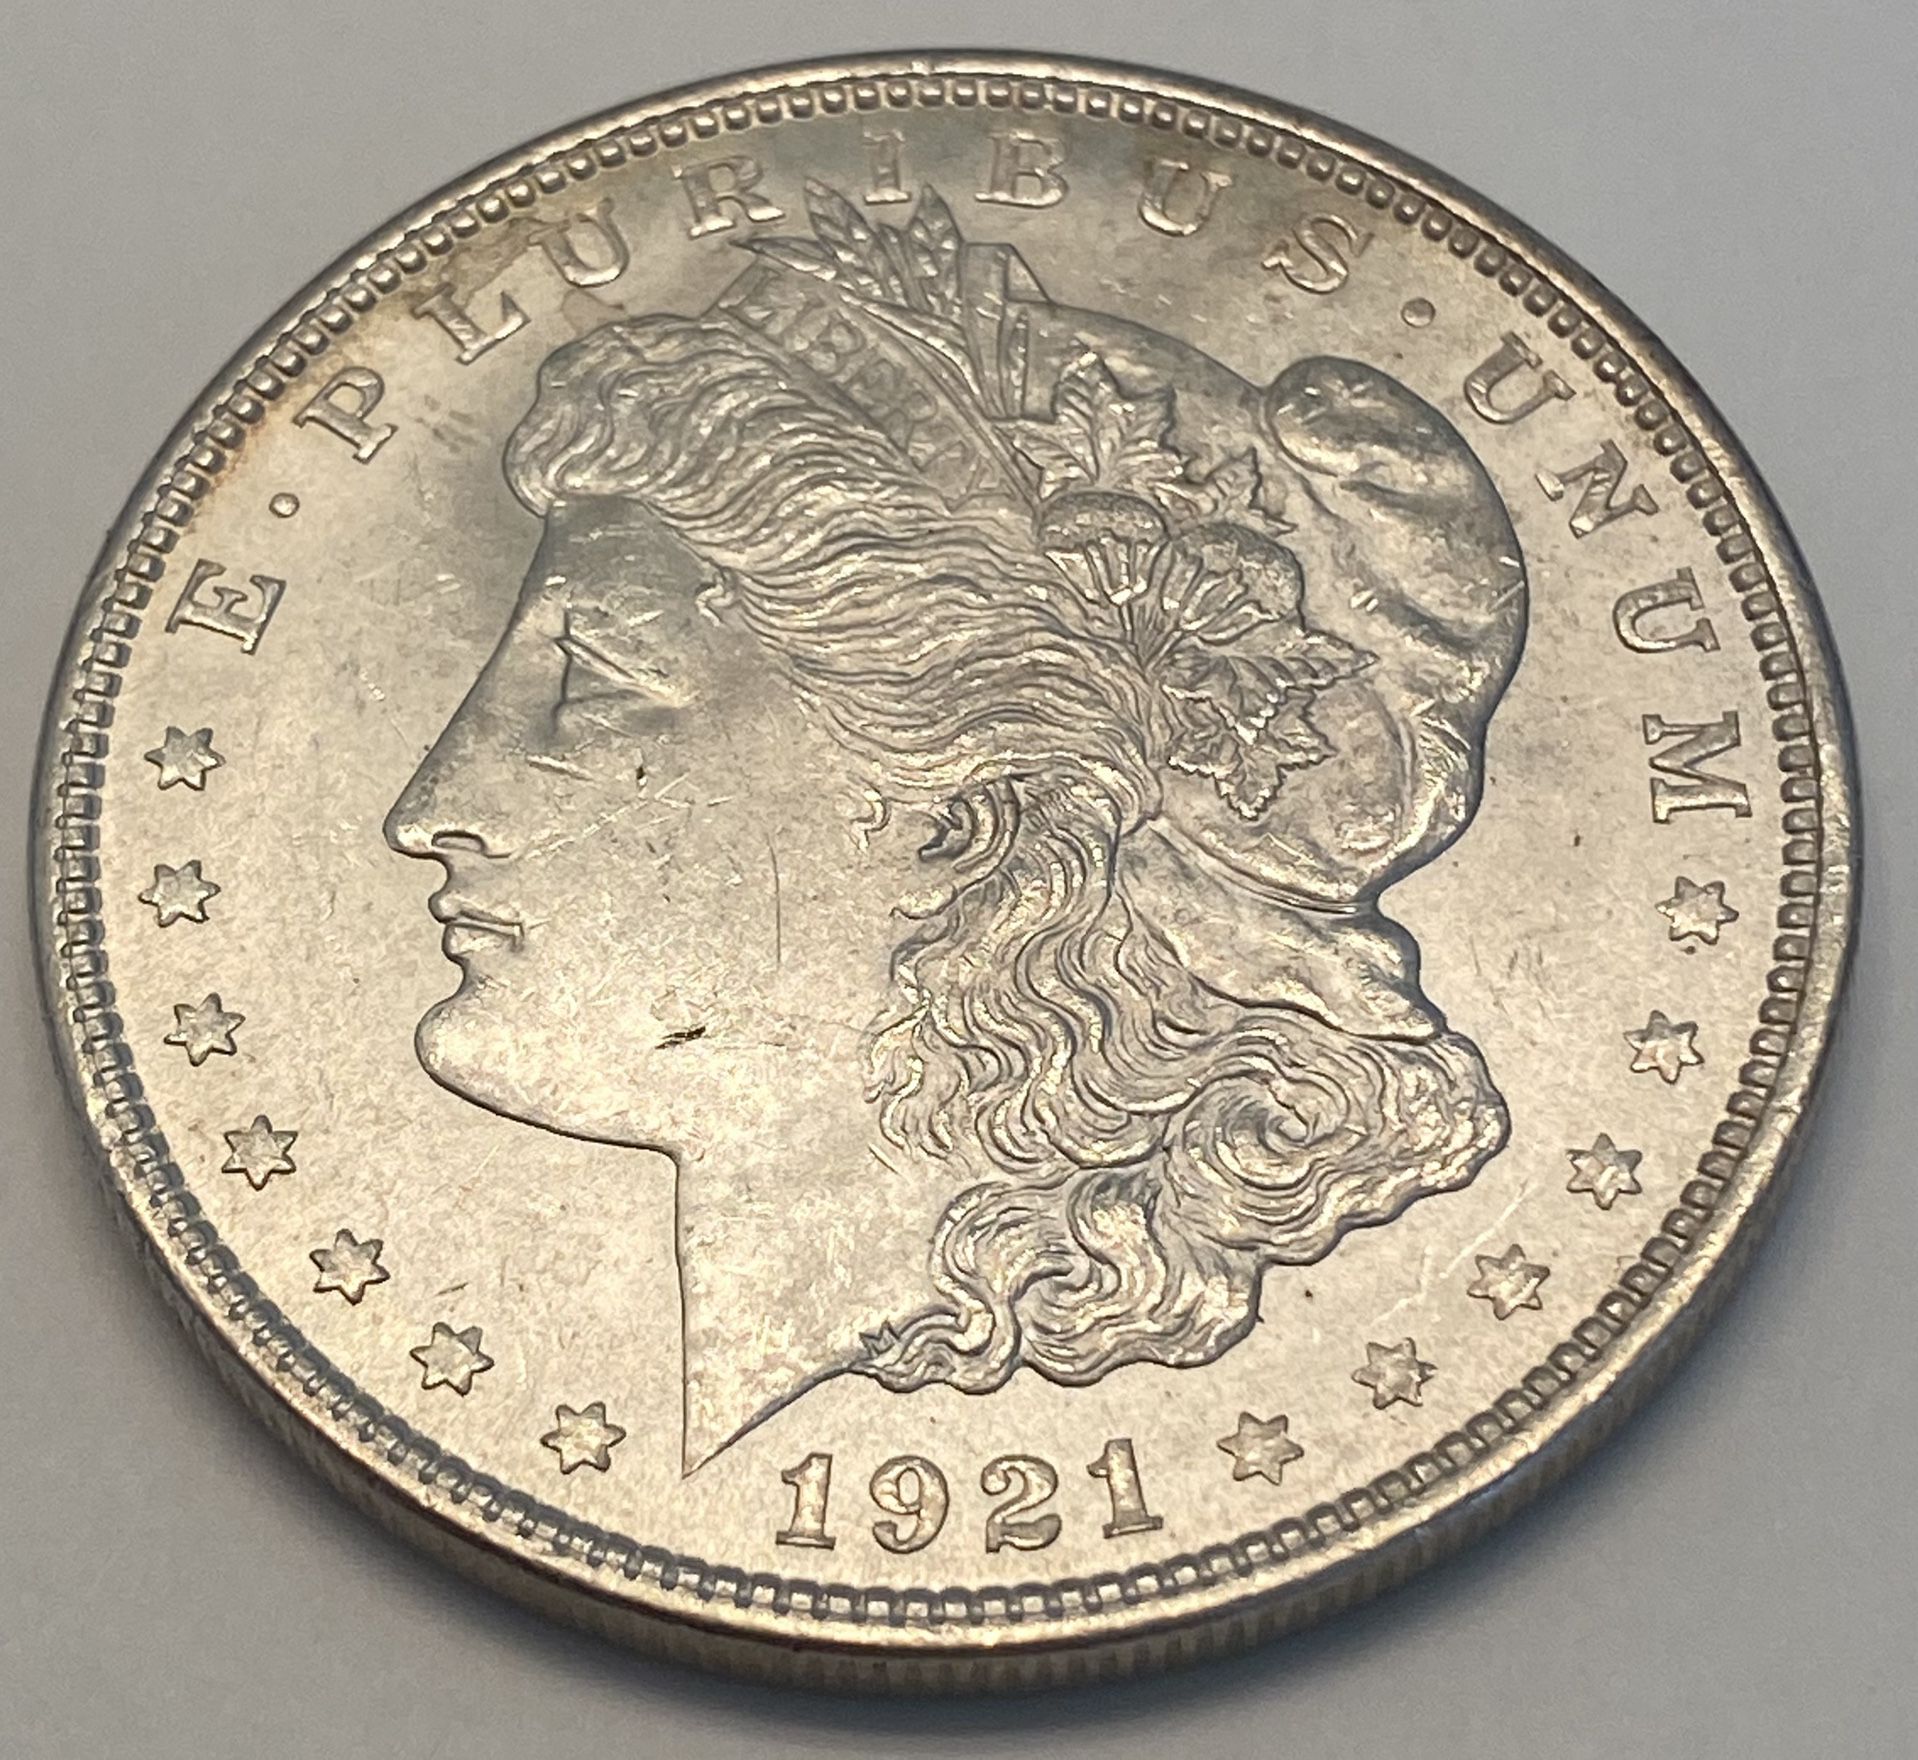 1921 UNITED STATES SILVER DOLLAR (MORGAN DOLLAR)